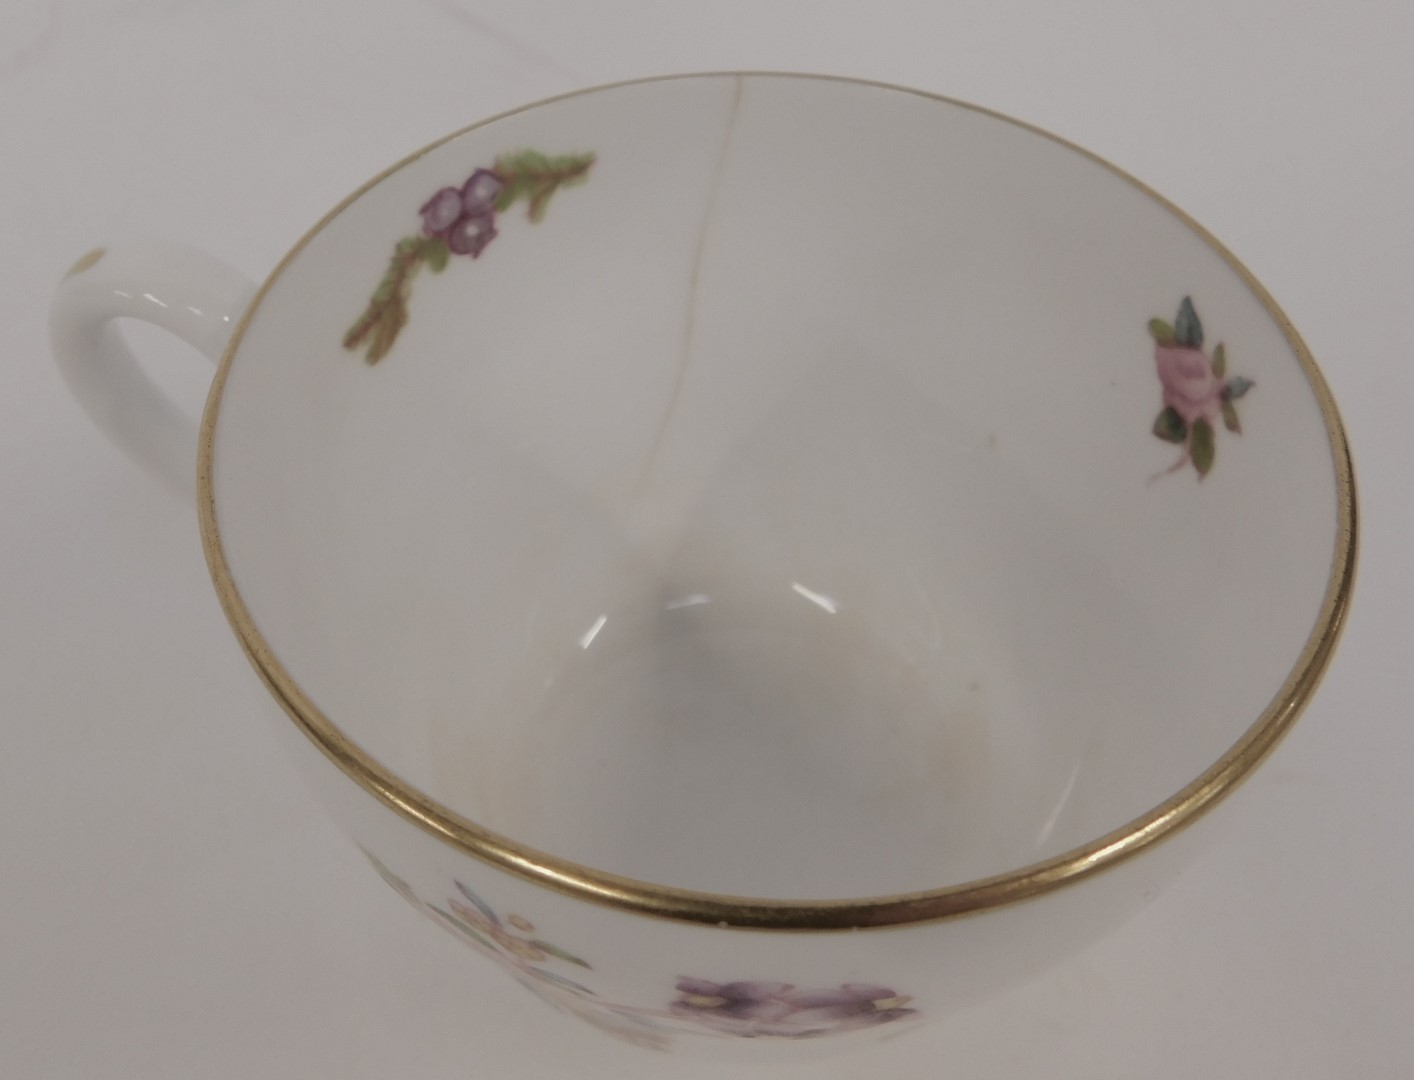 A Copeland Spode porcelain Dresden Rose pattern part tea service, comprising cream jug, sugar bowl, - Image 2 of 3